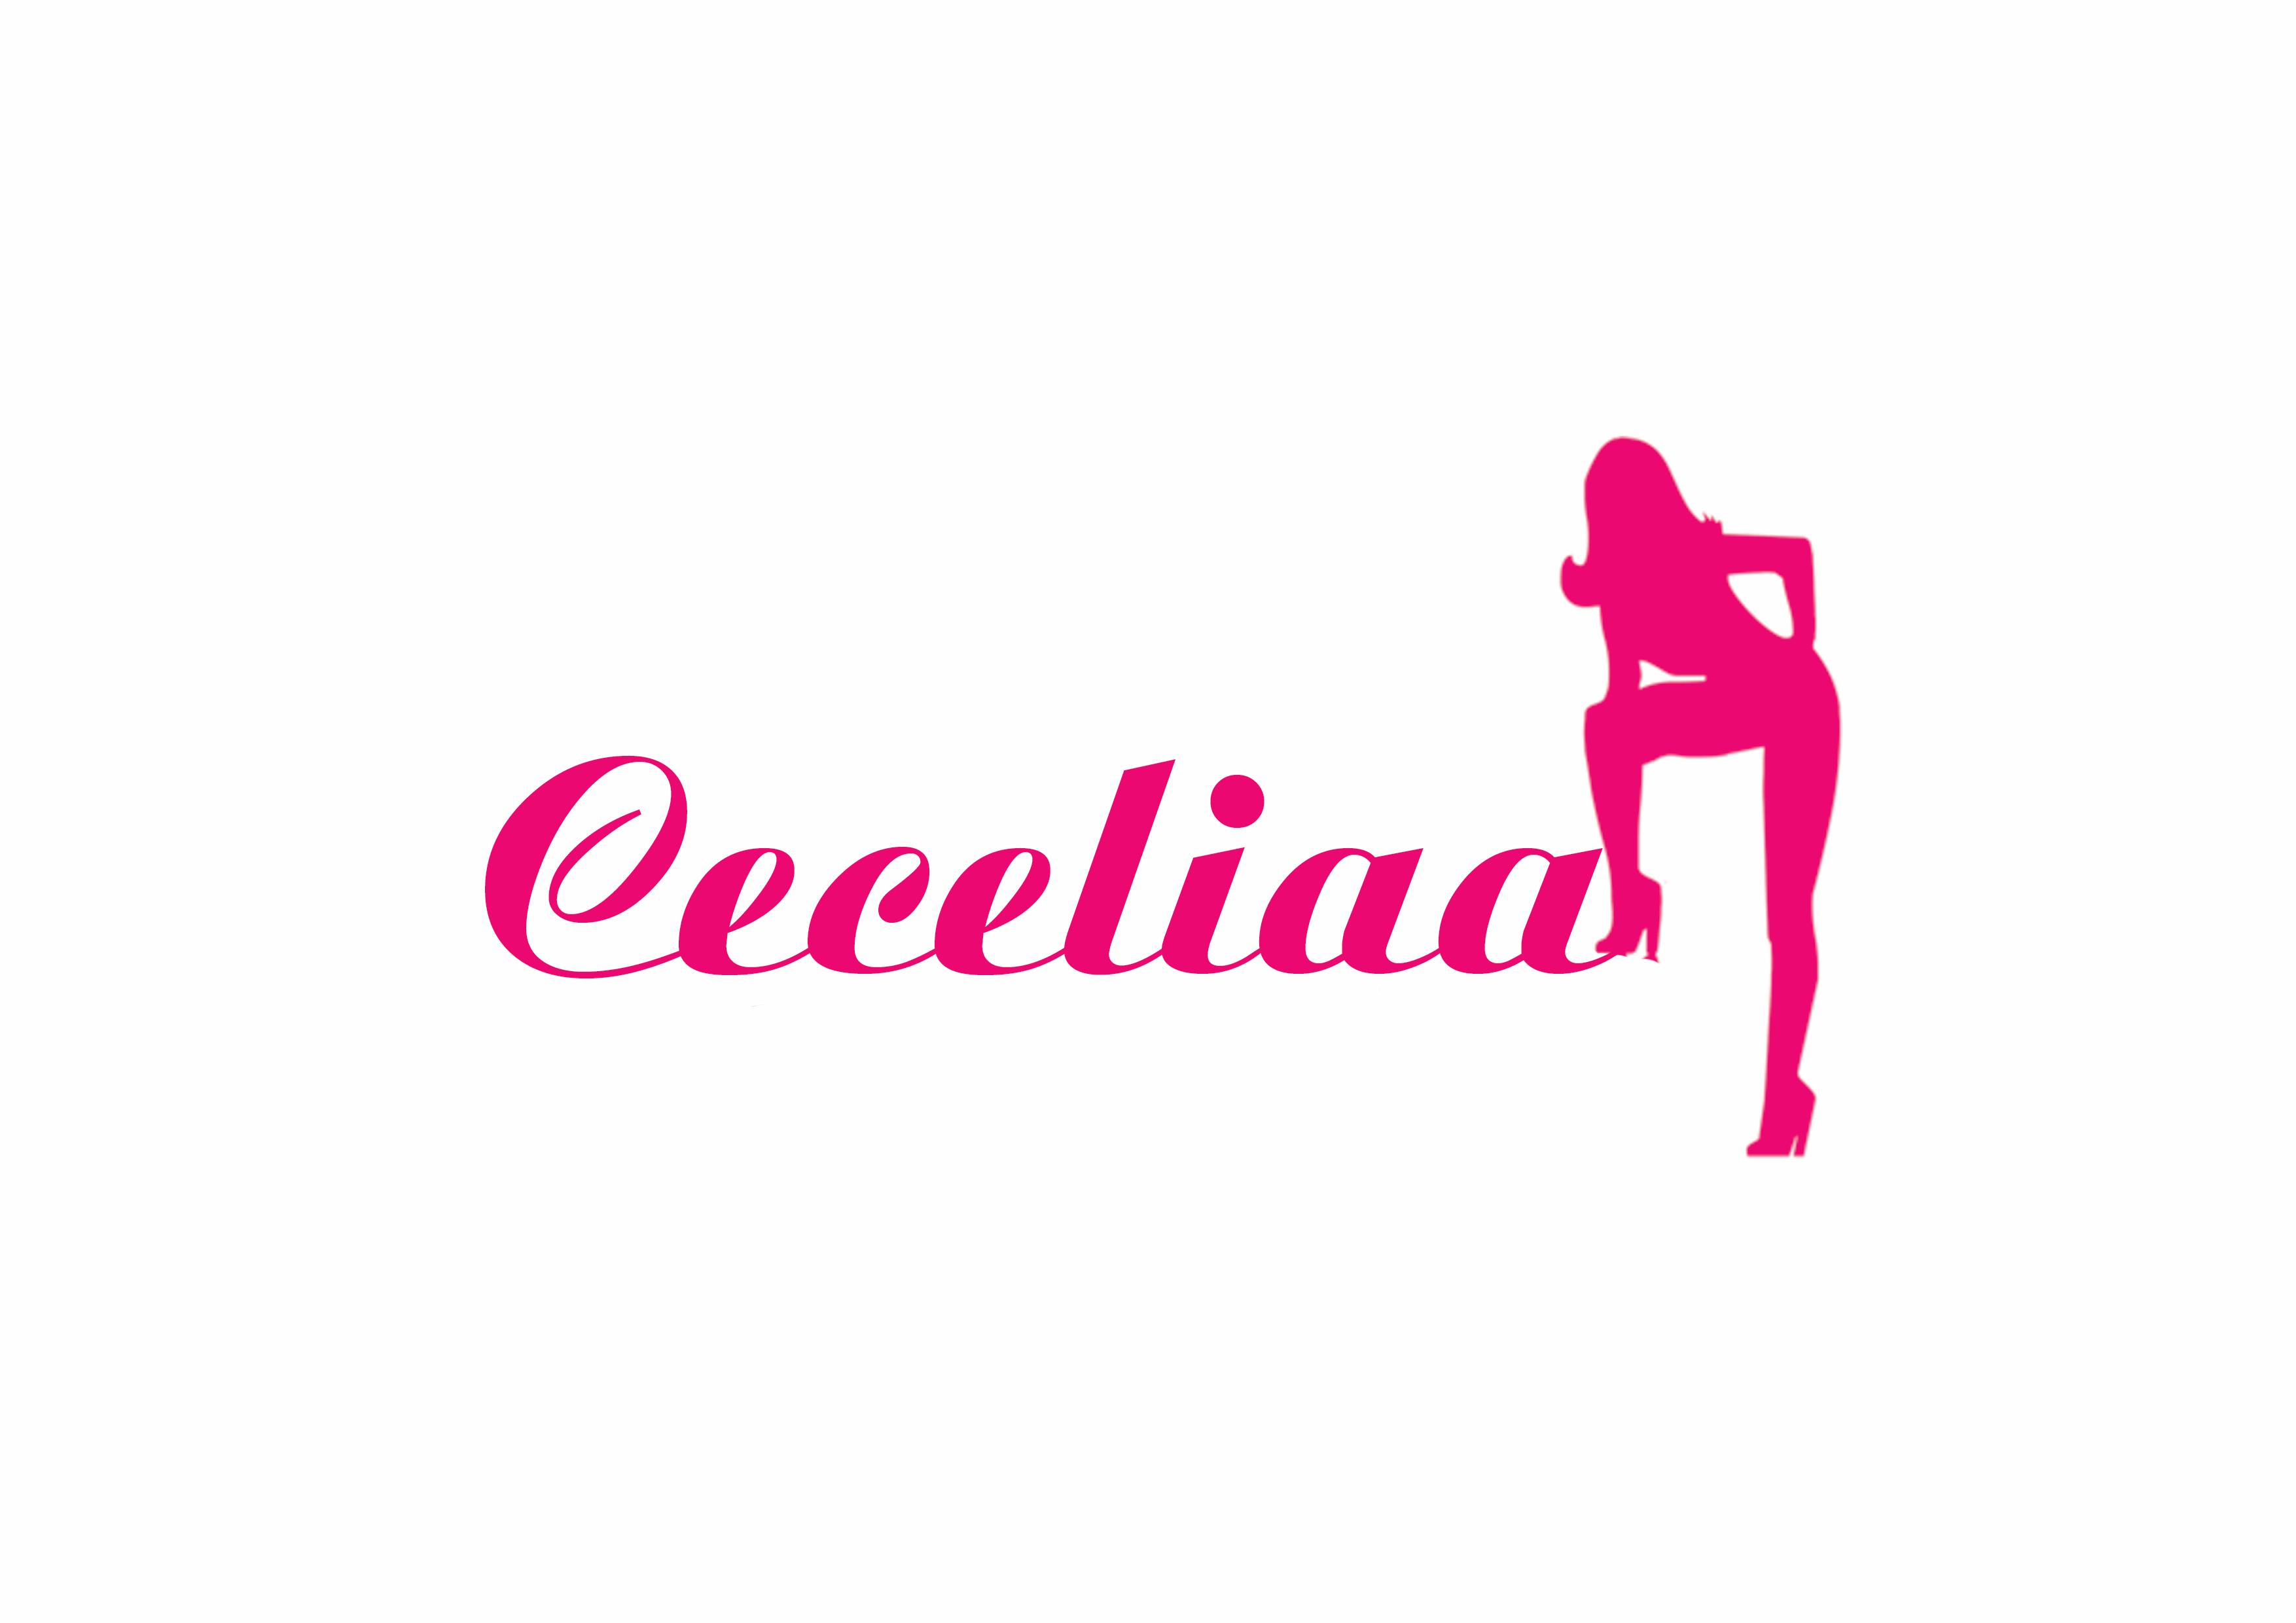 Ceceliaa  Cover Image